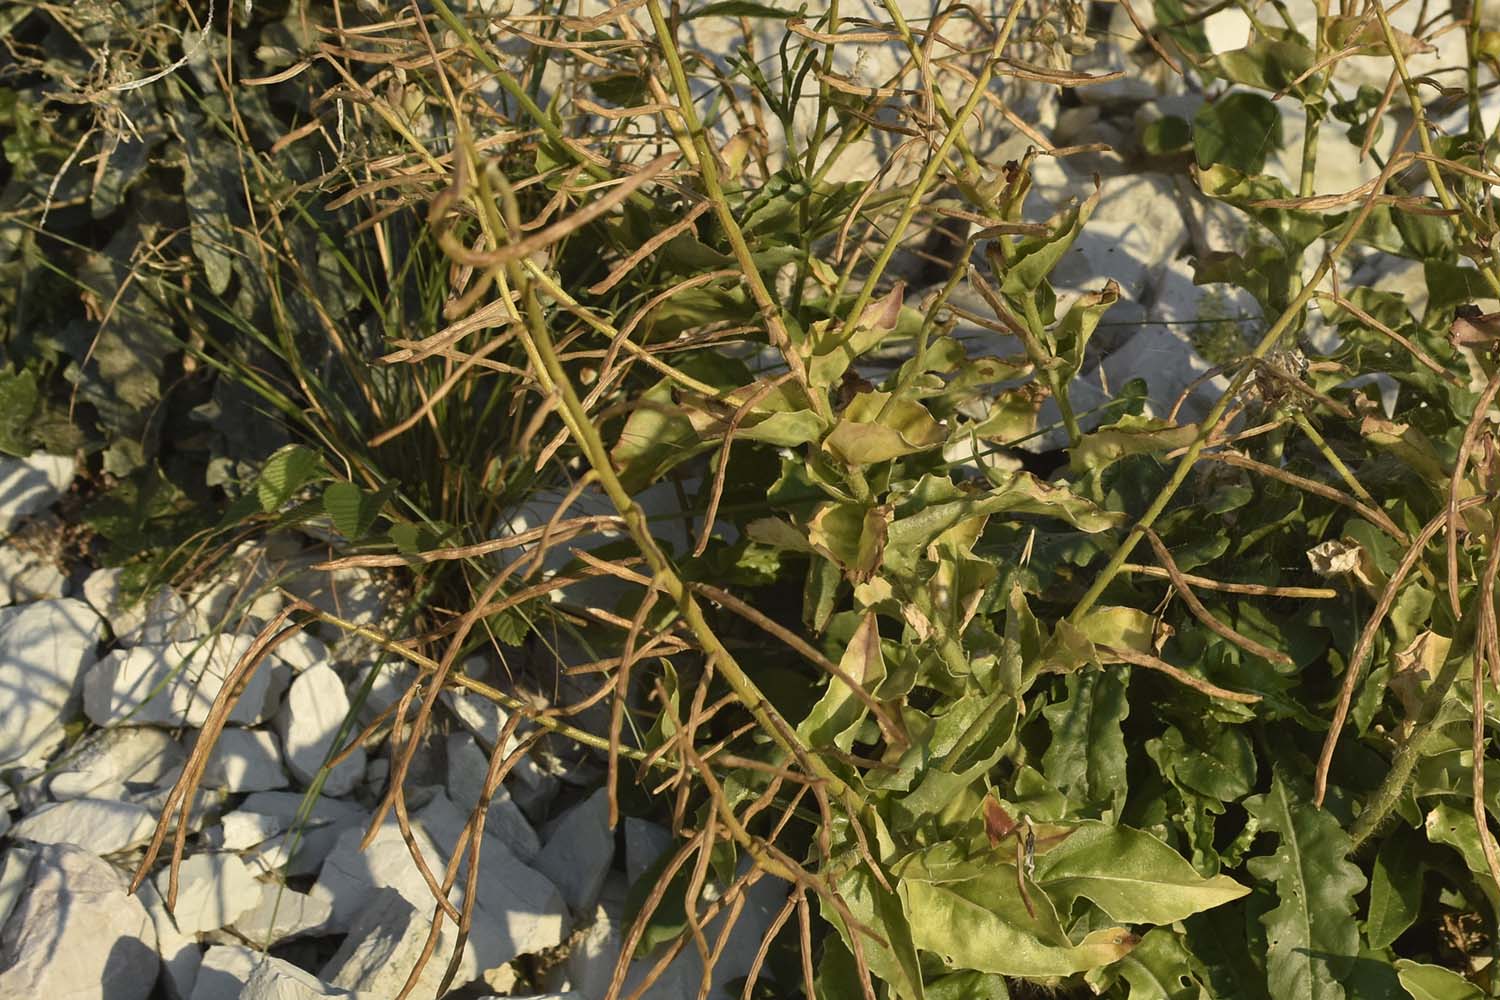 Brassica gravinae